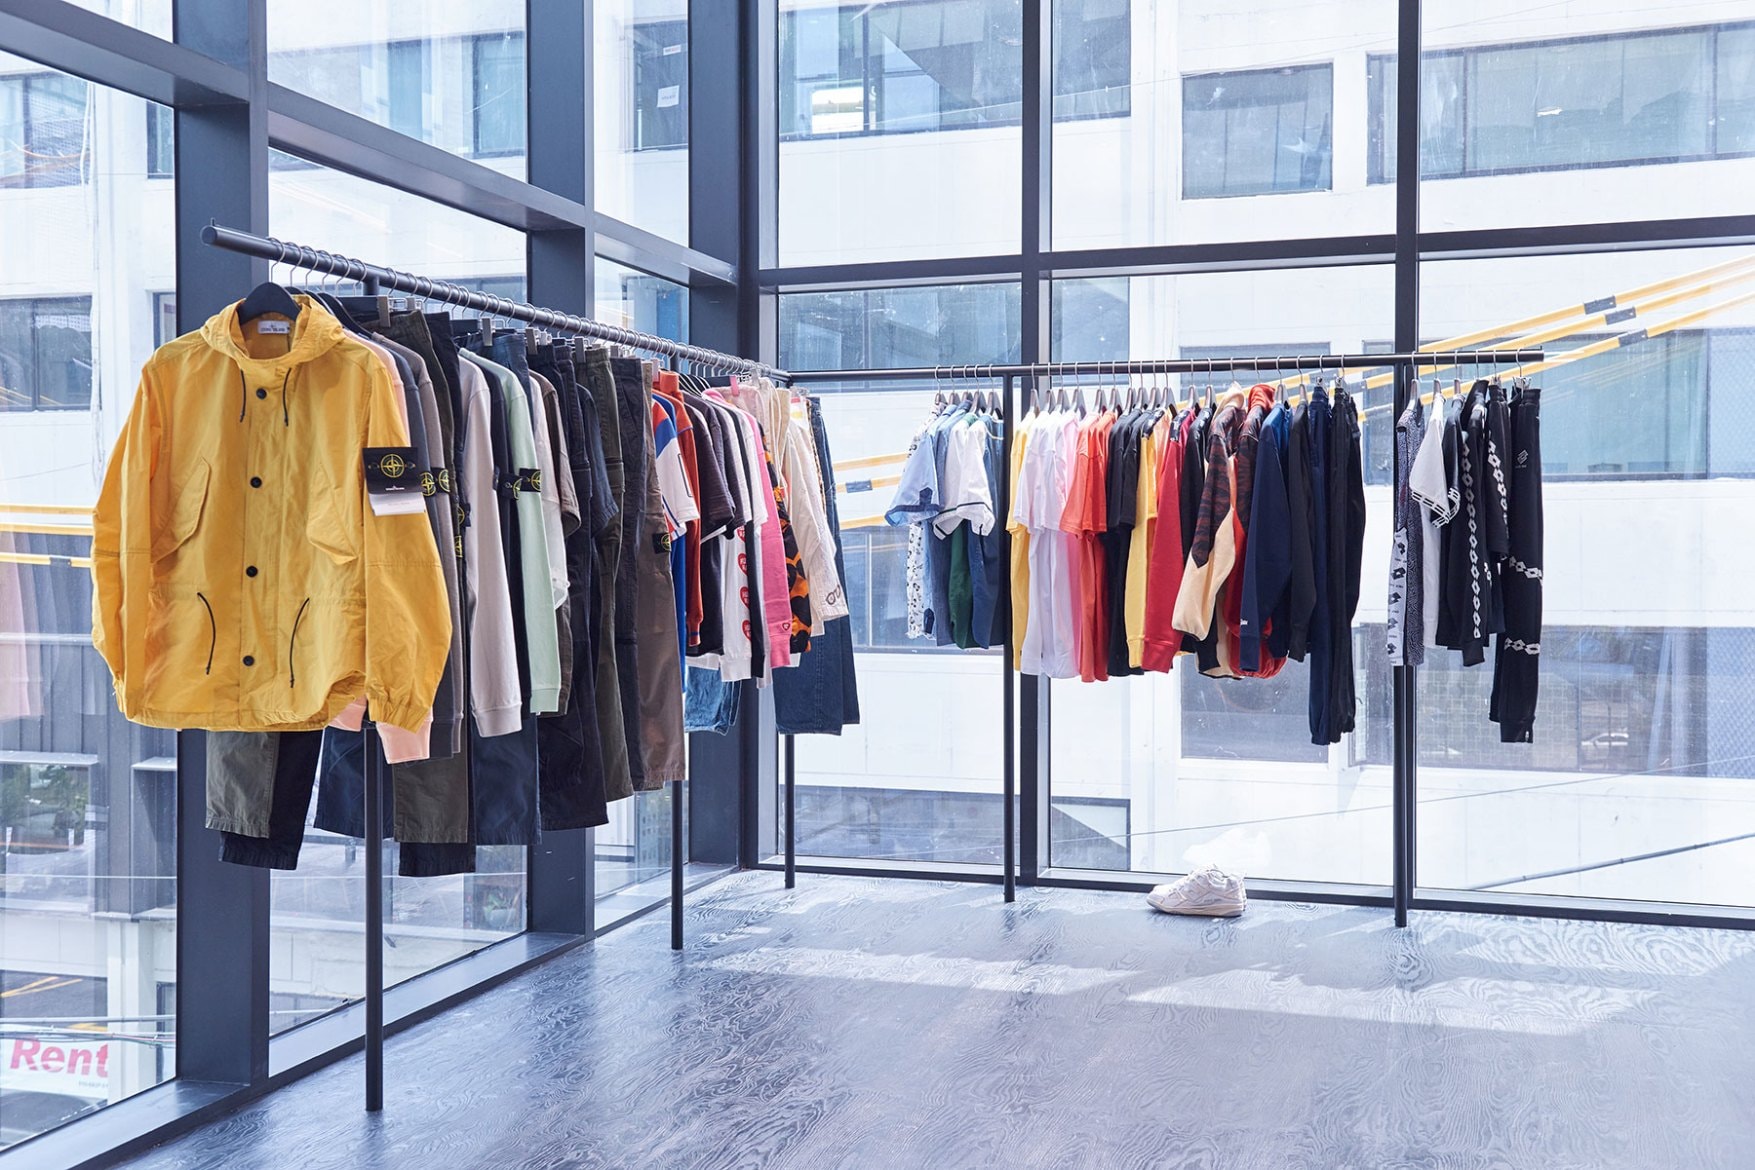 worksout hongdae seoul select shop streetwear collaborations windows clothing racks yellow jacket stone island